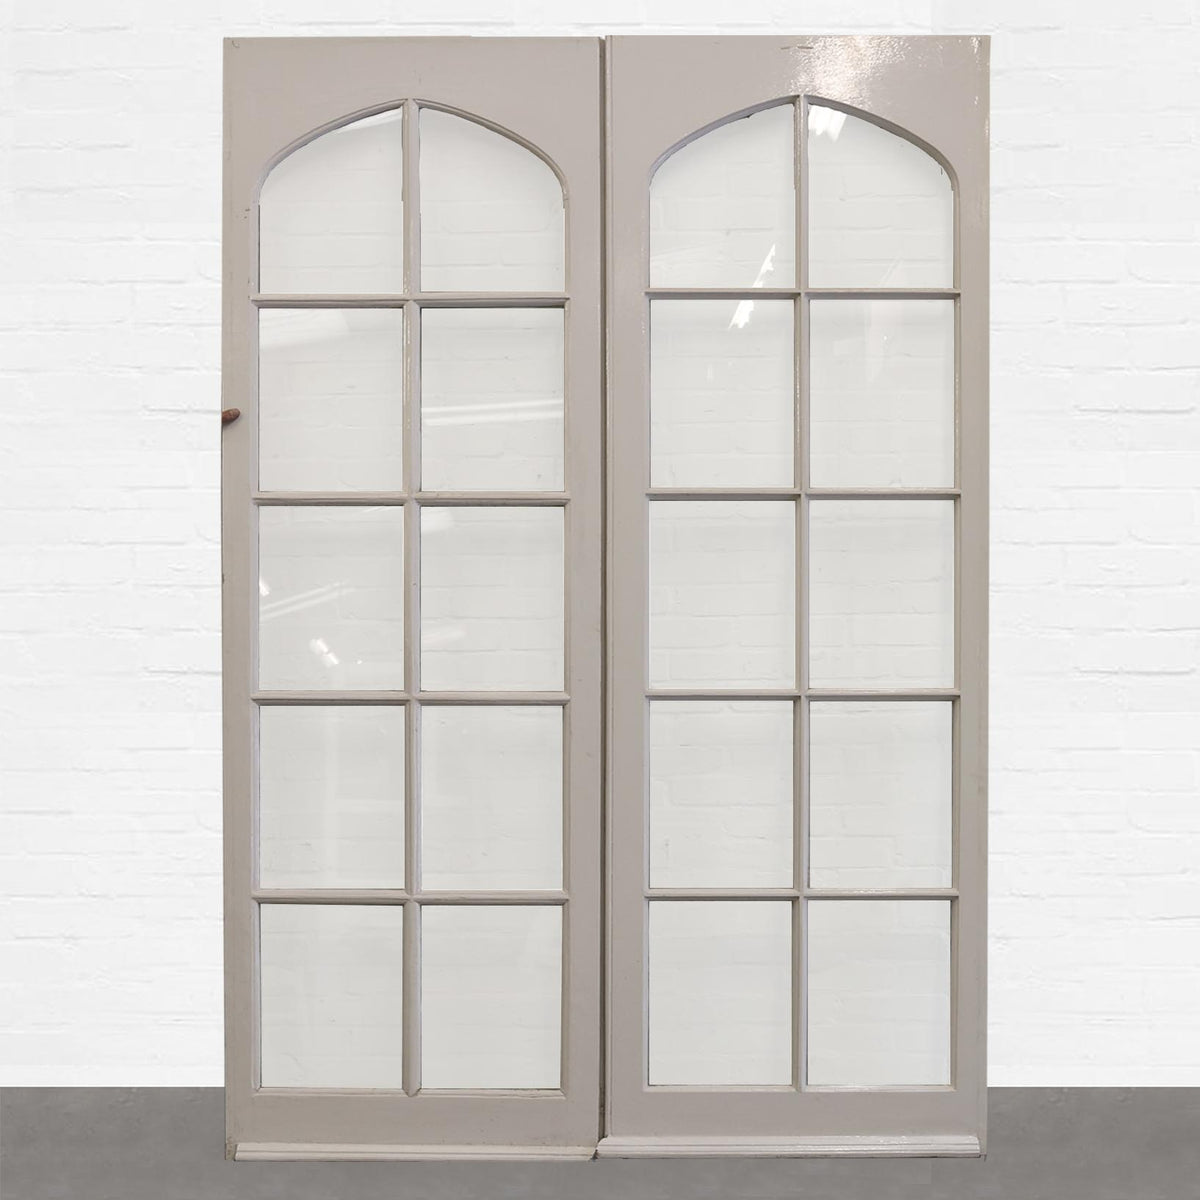 Antique Pine Glazed Double Doors | The Architectural Forum